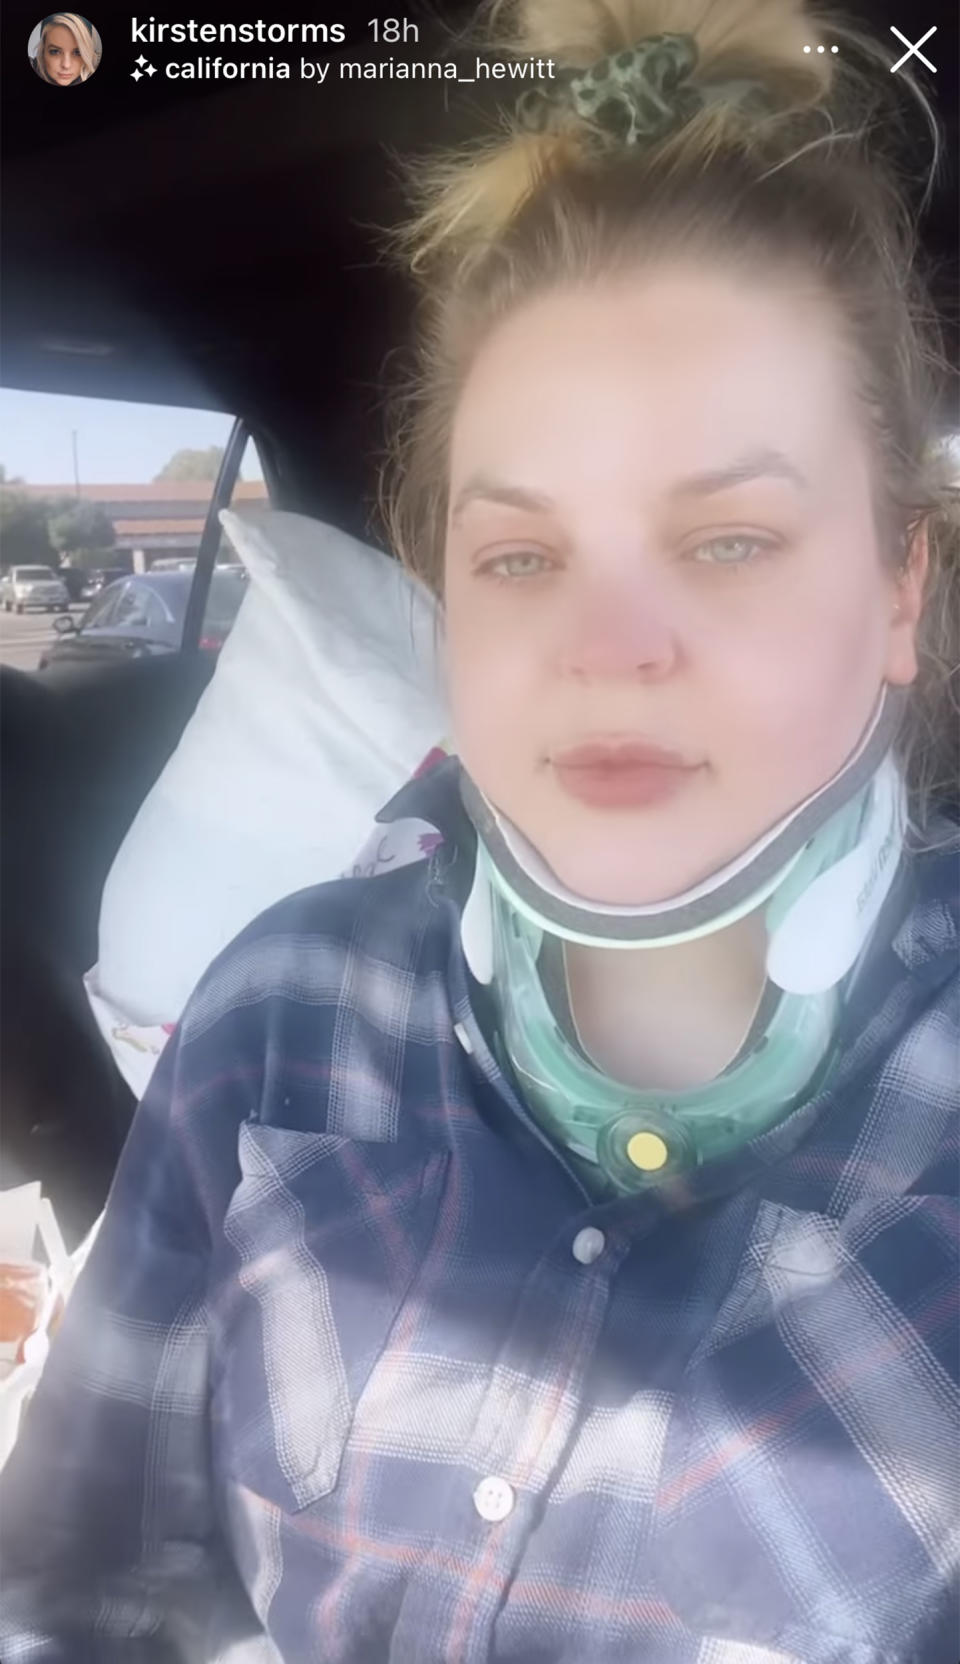 Kirsten Storms after her brain surgery. (kirstenstorms)